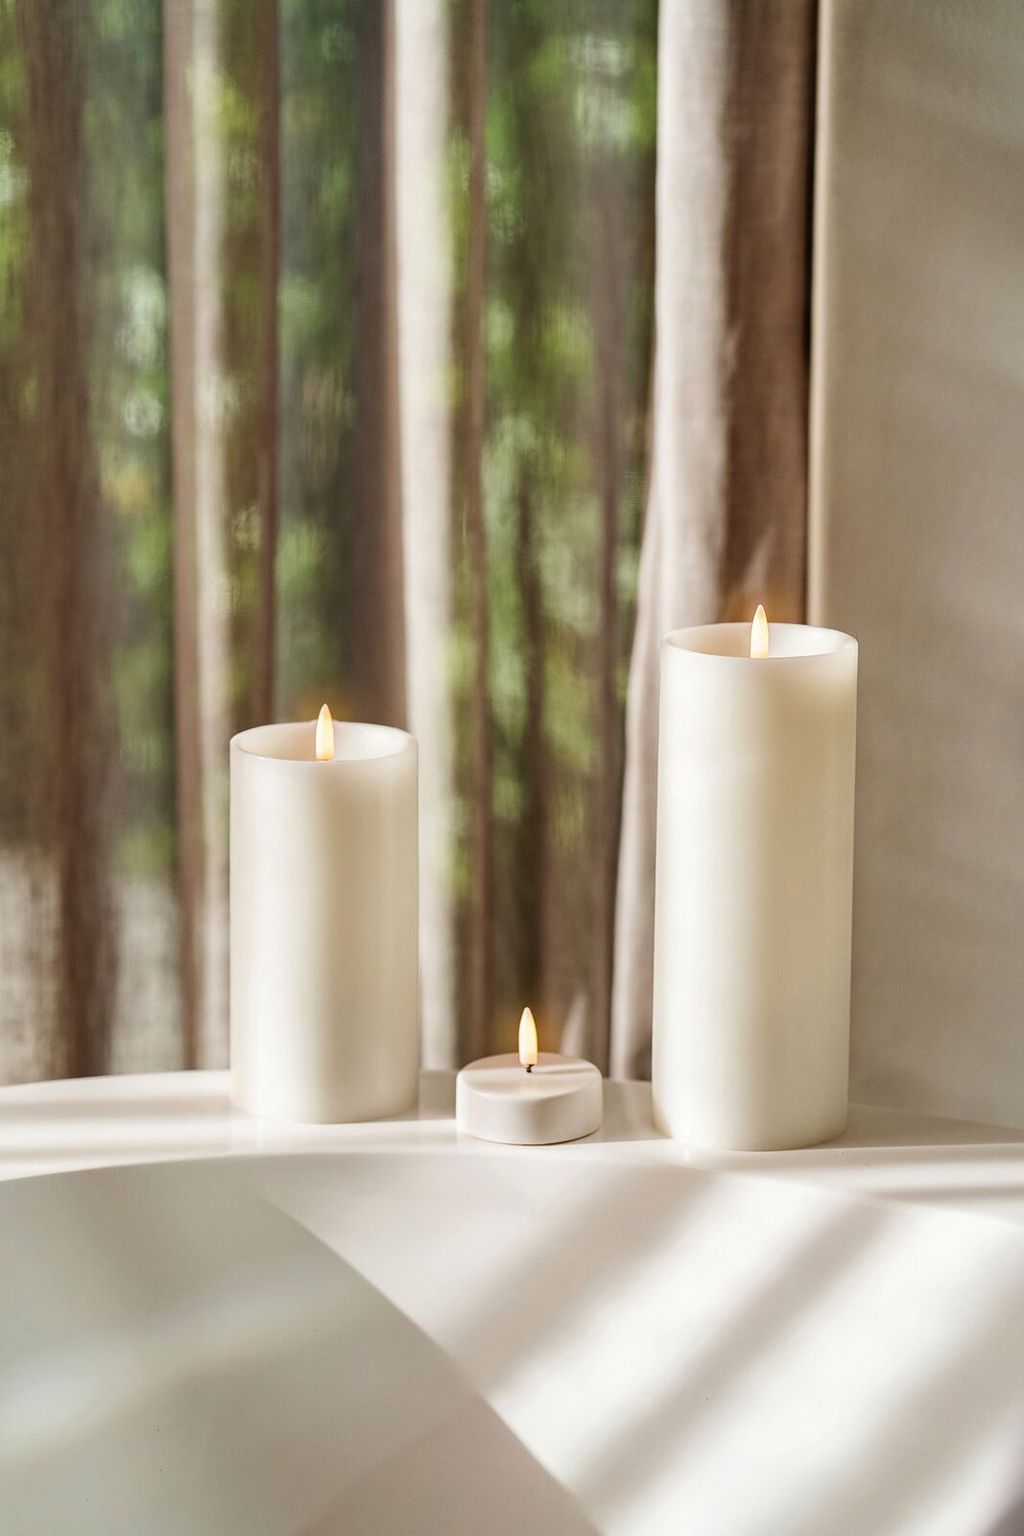 Uyuni Lighting Led Pillar Candle With Shoulder 3 D Flame øx H 7,8x10,1 Cm, Nordic White